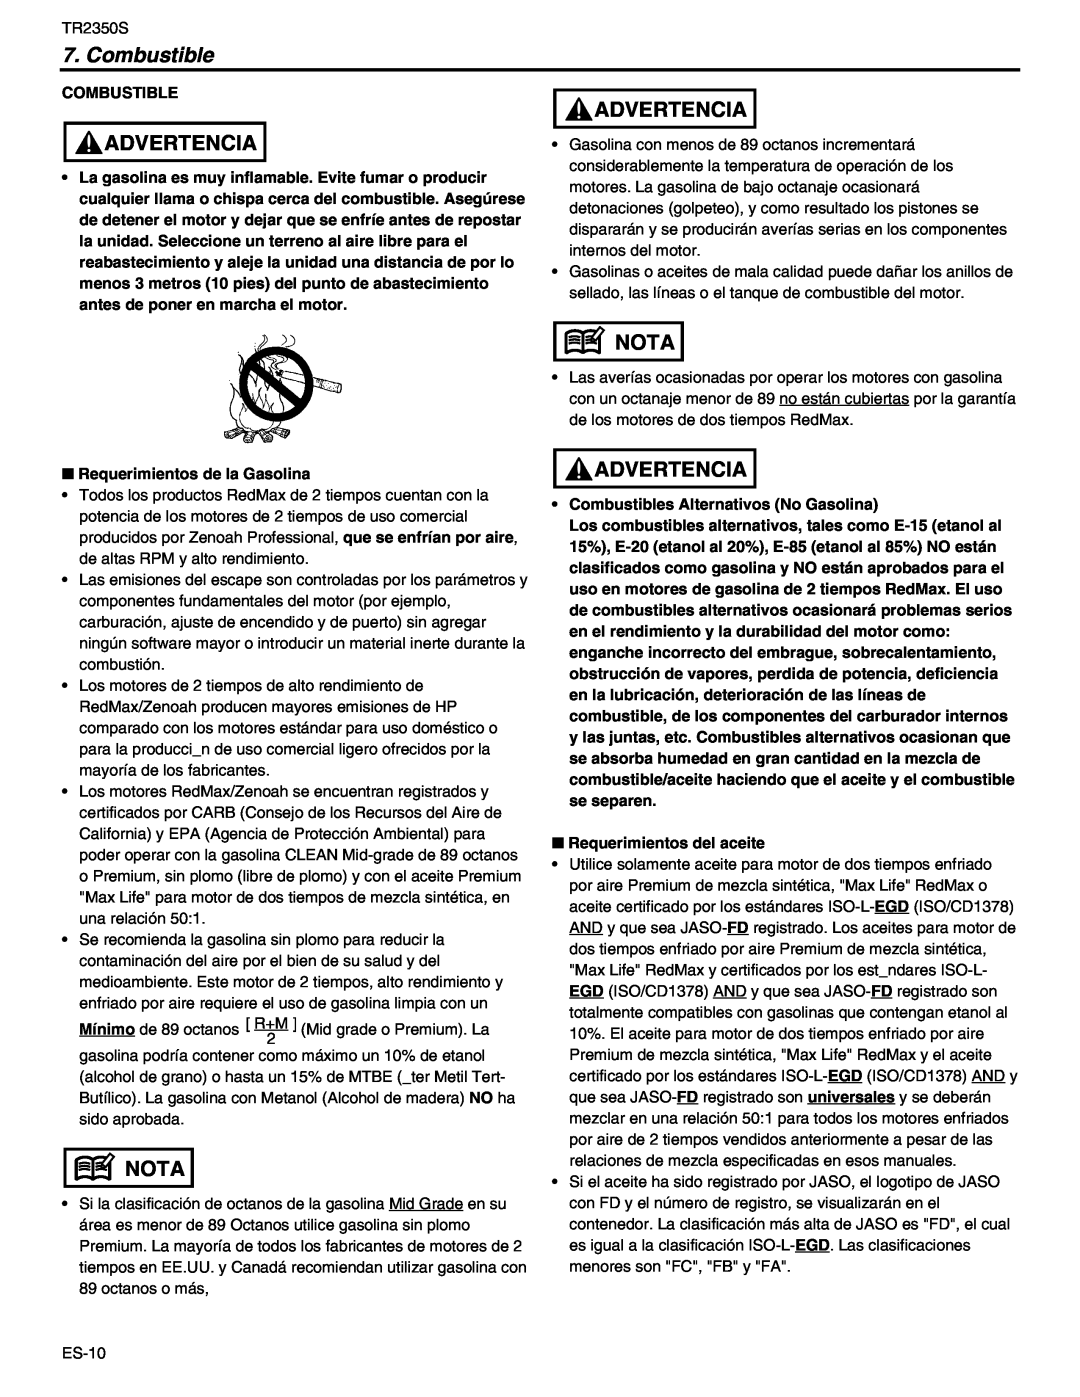 RedMax TR2350S manual Combustible, Advertencia, Nota 